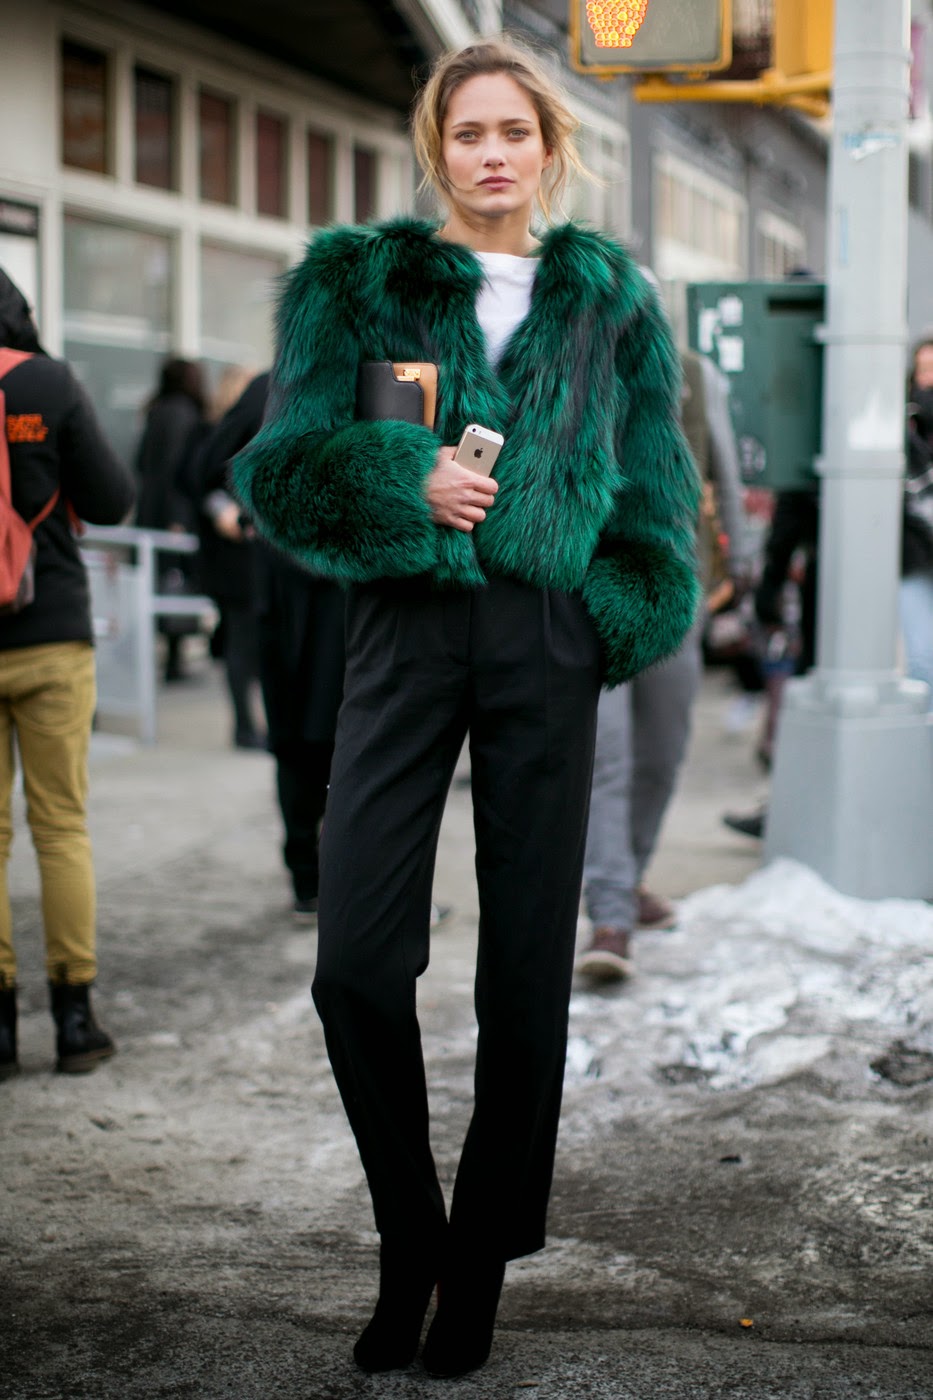 Karmen Pedaru in a Fur Coat, Exiting Louis Vuitton